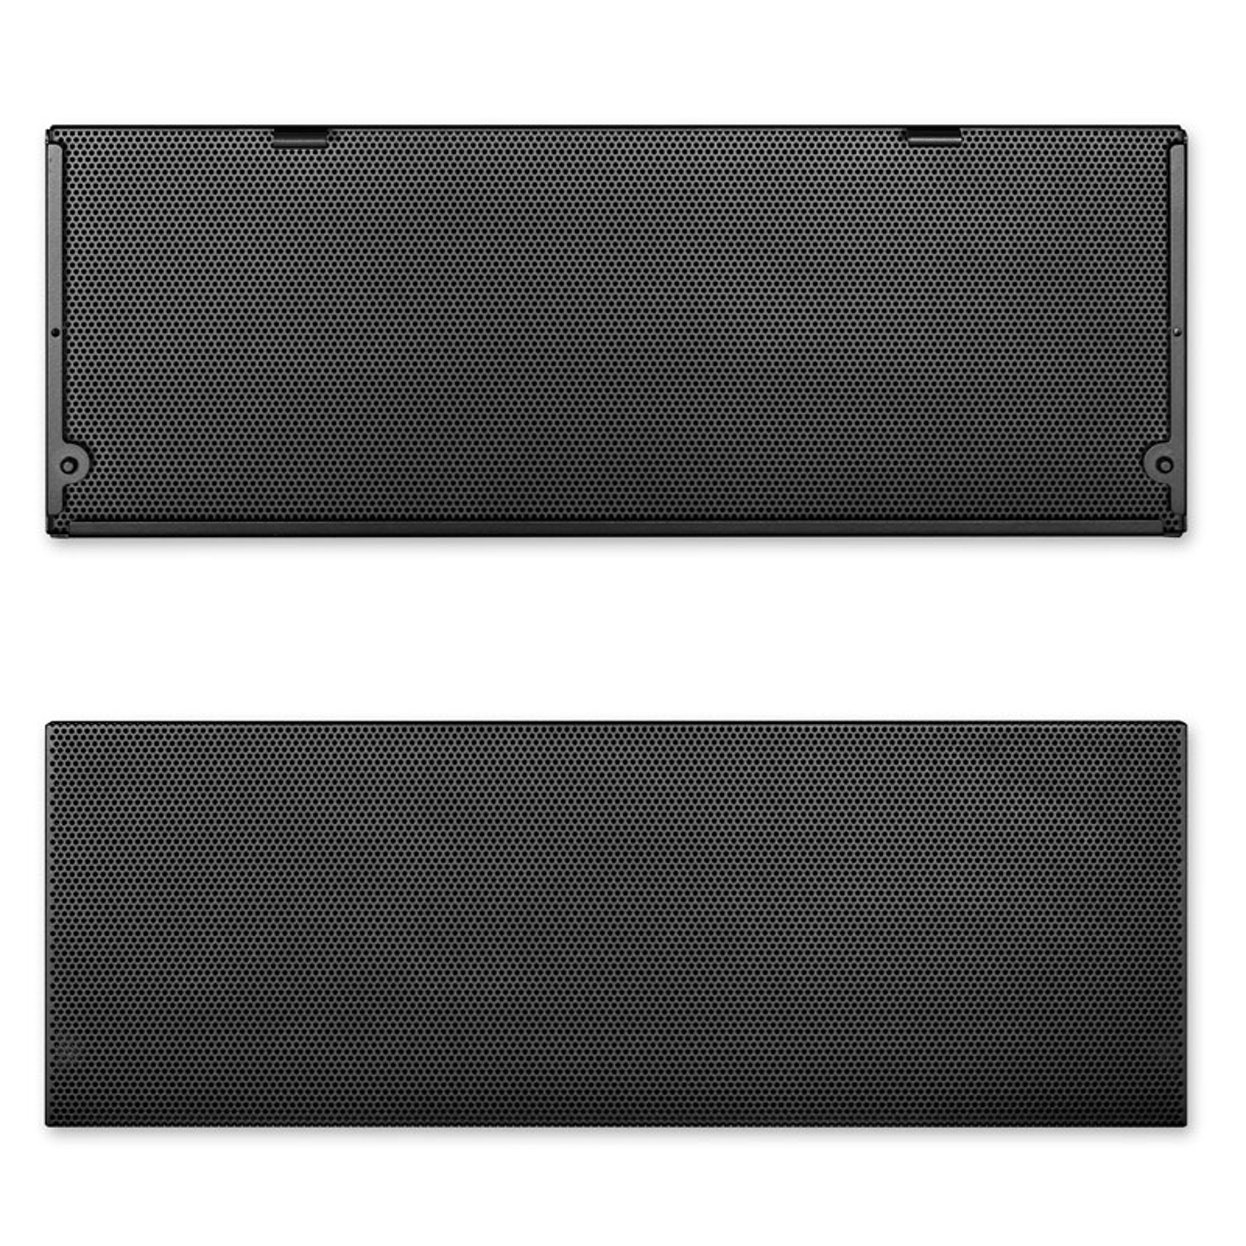 Photos - Other for Computer Lian Li Q58 Mesh Kit Side Panel for Q58 Case, Black Q58-1X 